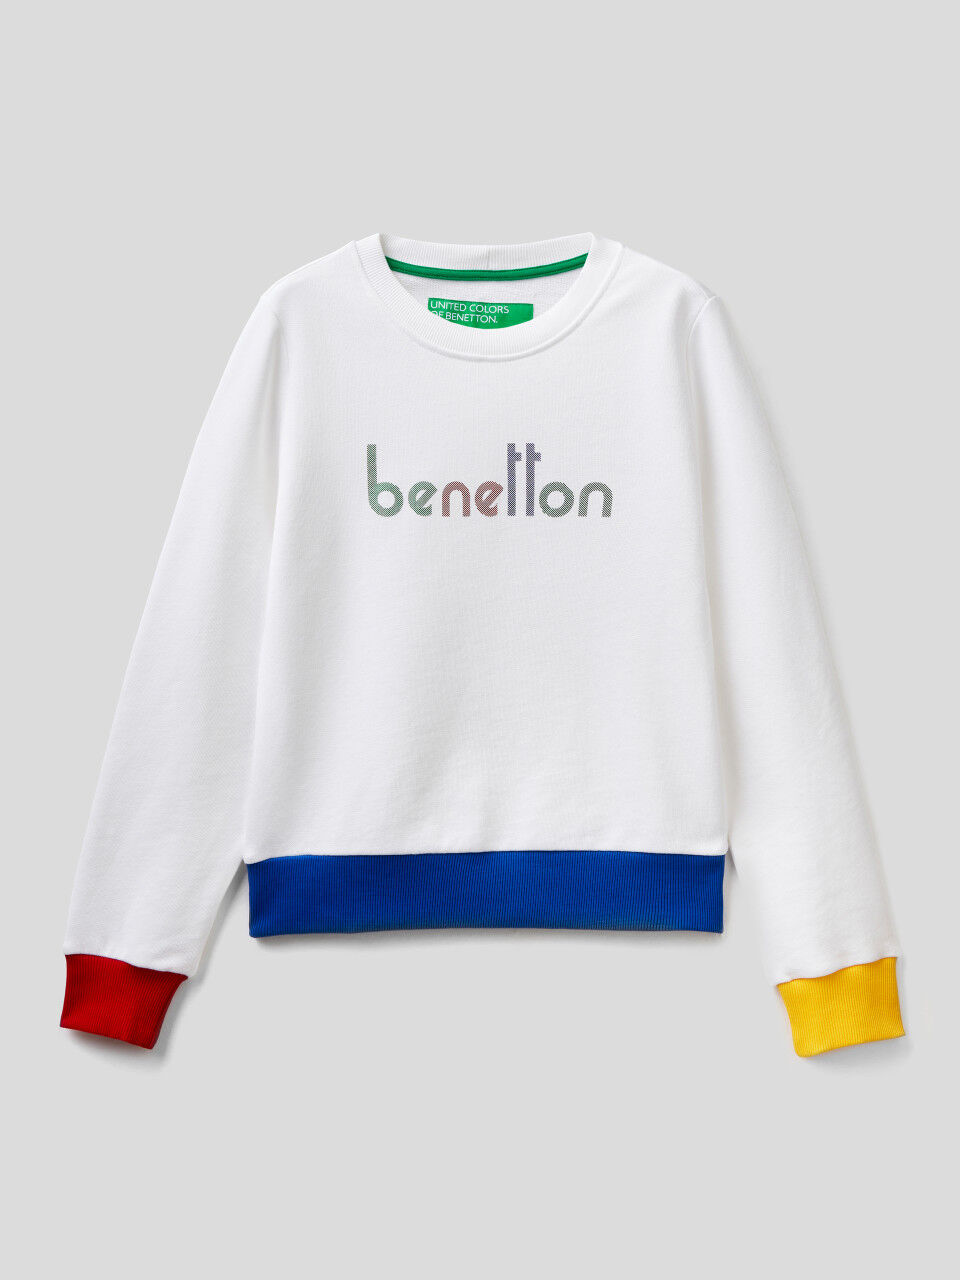 S Weste 100% Wolle Benetton Gr Damen Kleidung Hoodies & Pullover Westen United Colors of Benetton Westen 